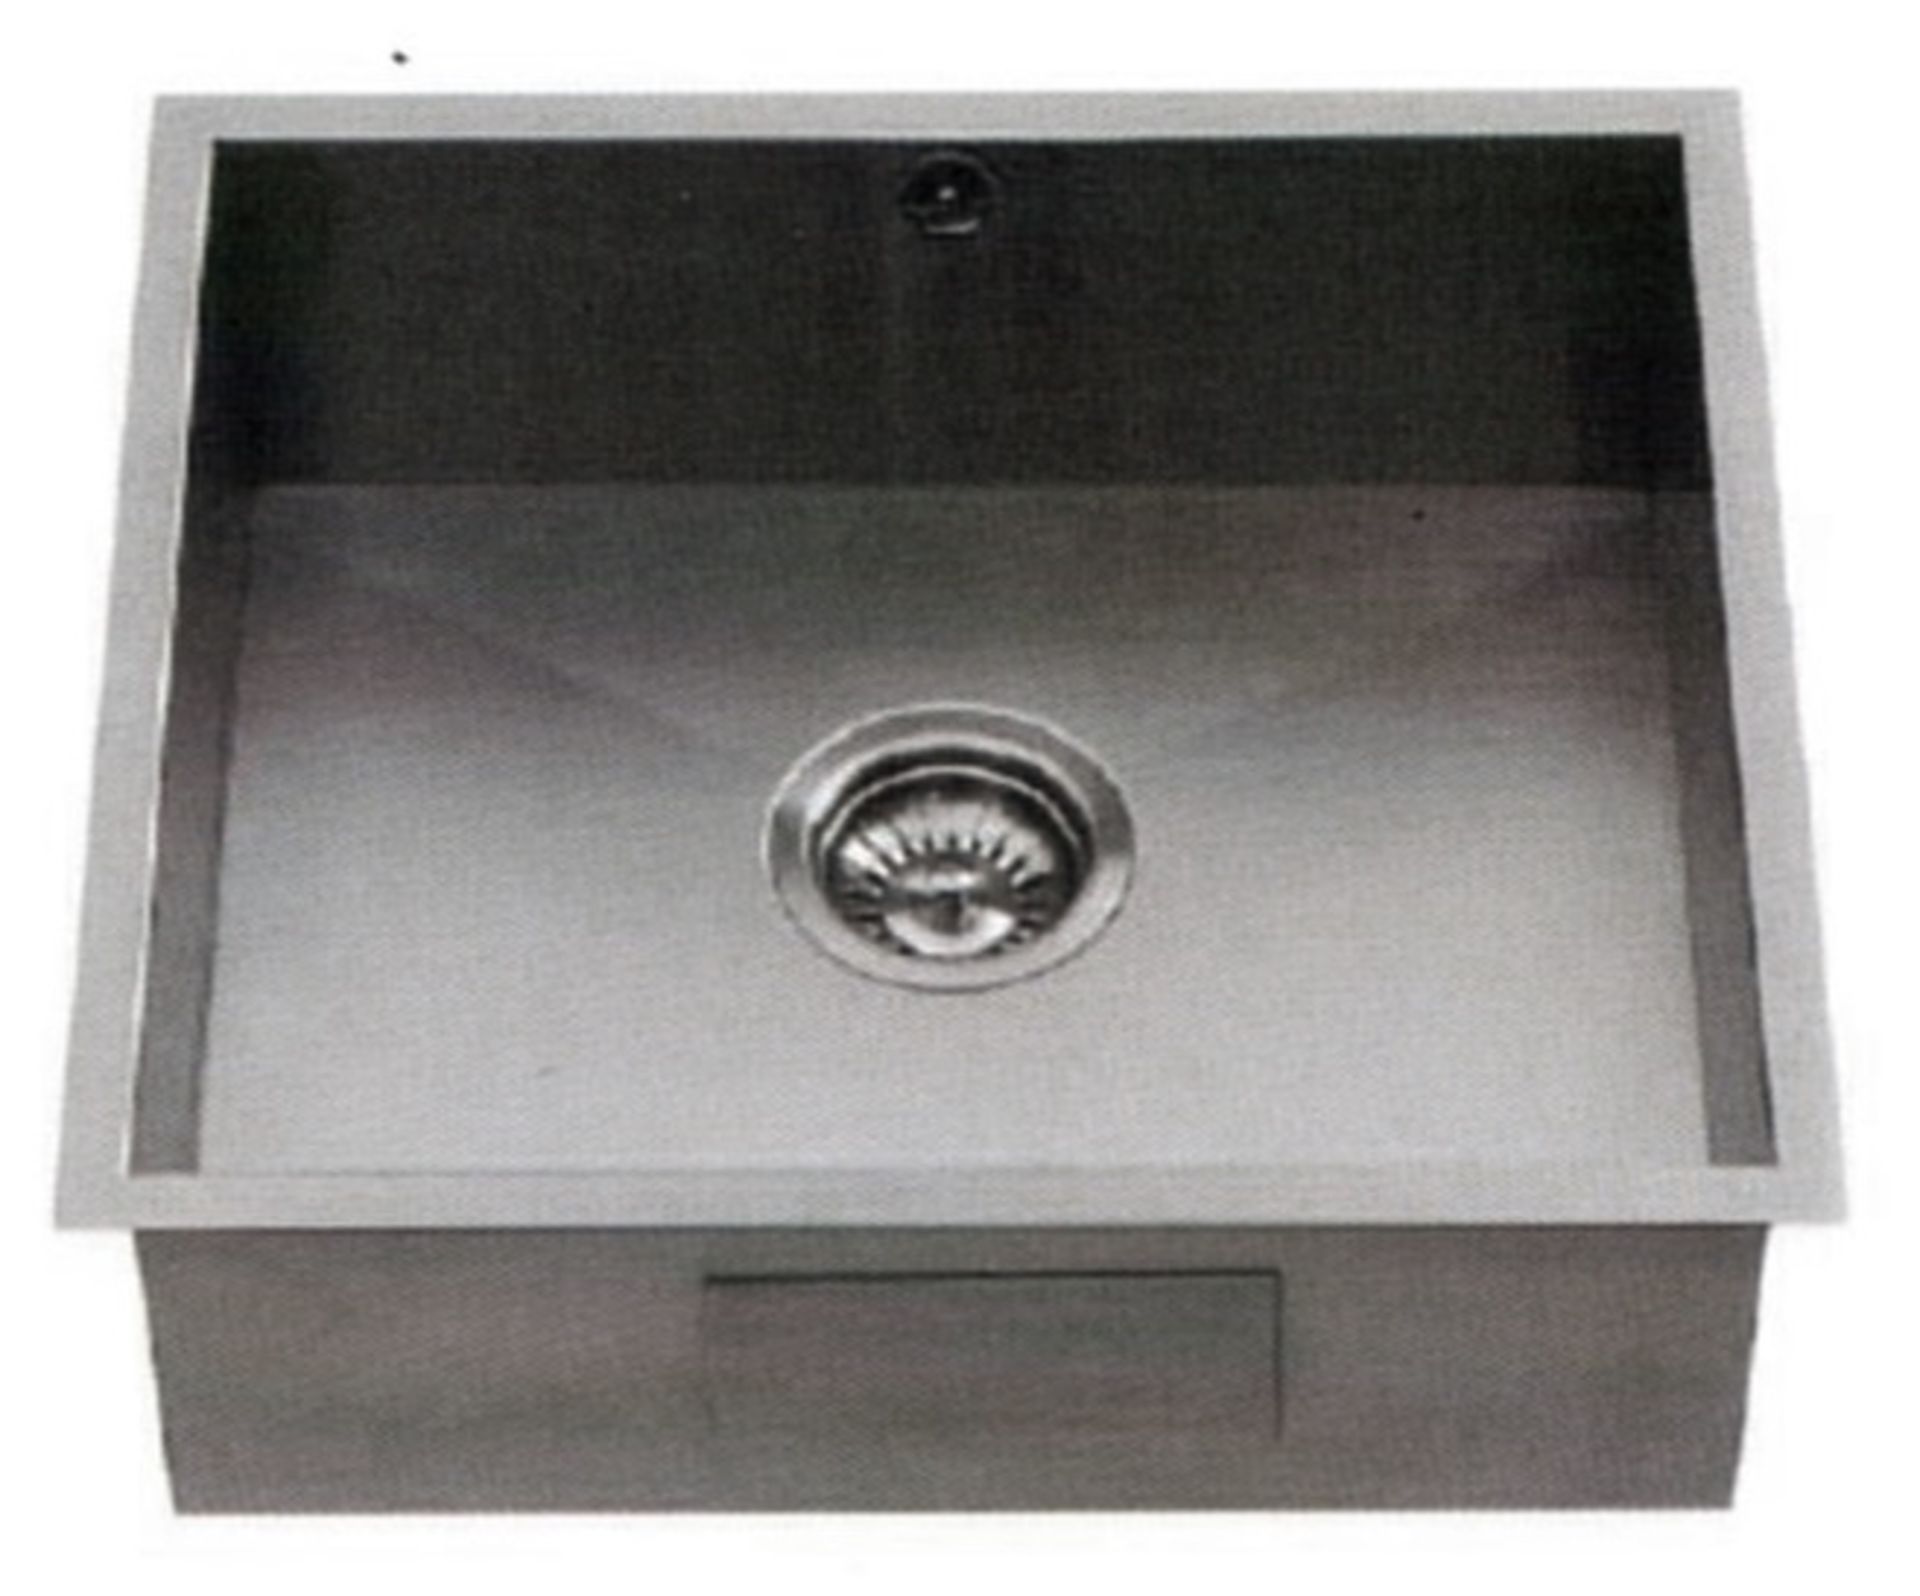 1 x Luxury Man-Made Stainless Steel Topmount Kitchen Sink With Nano Surface Technology - Finish: Gun